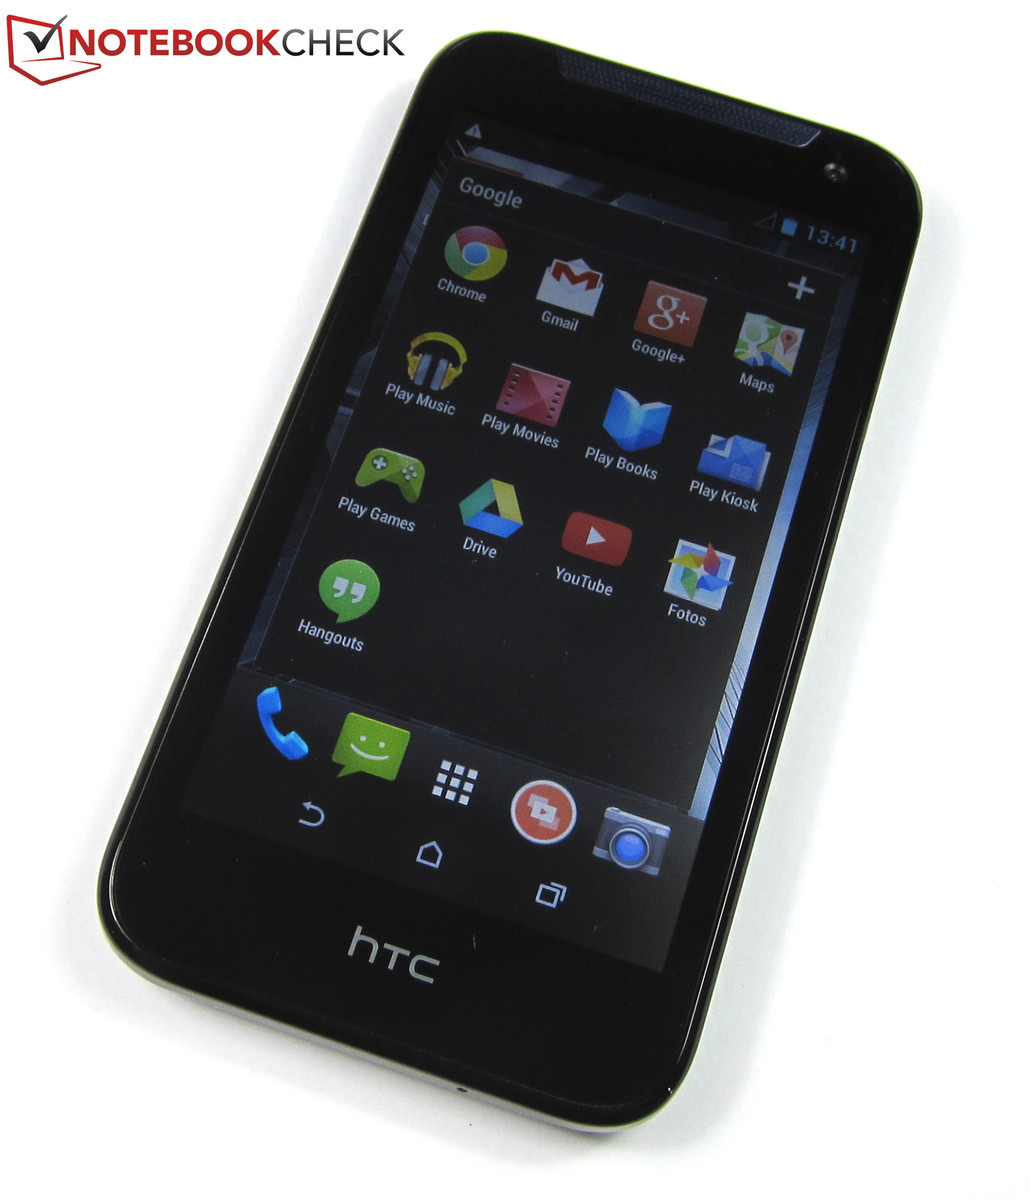 astronomie Vesting auditorium HTC Desire 310 Smartphone Review - NotebookCheck.net Reviews